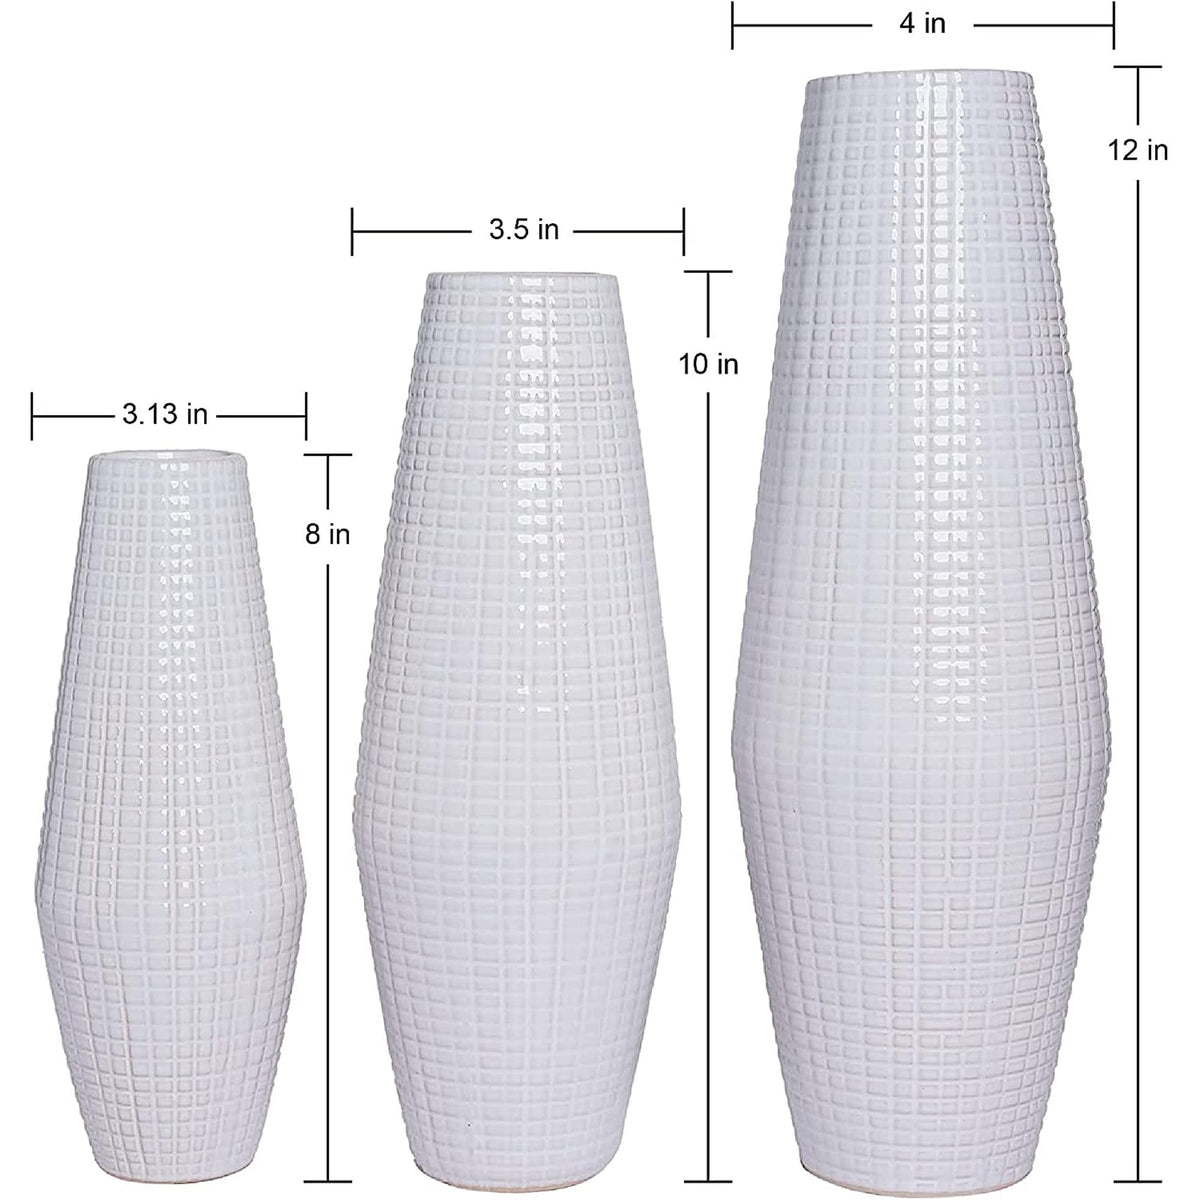 HOSLEY® Ceramic Textured Vase, White Glazed, Set of 3,  12", 10", 8" High